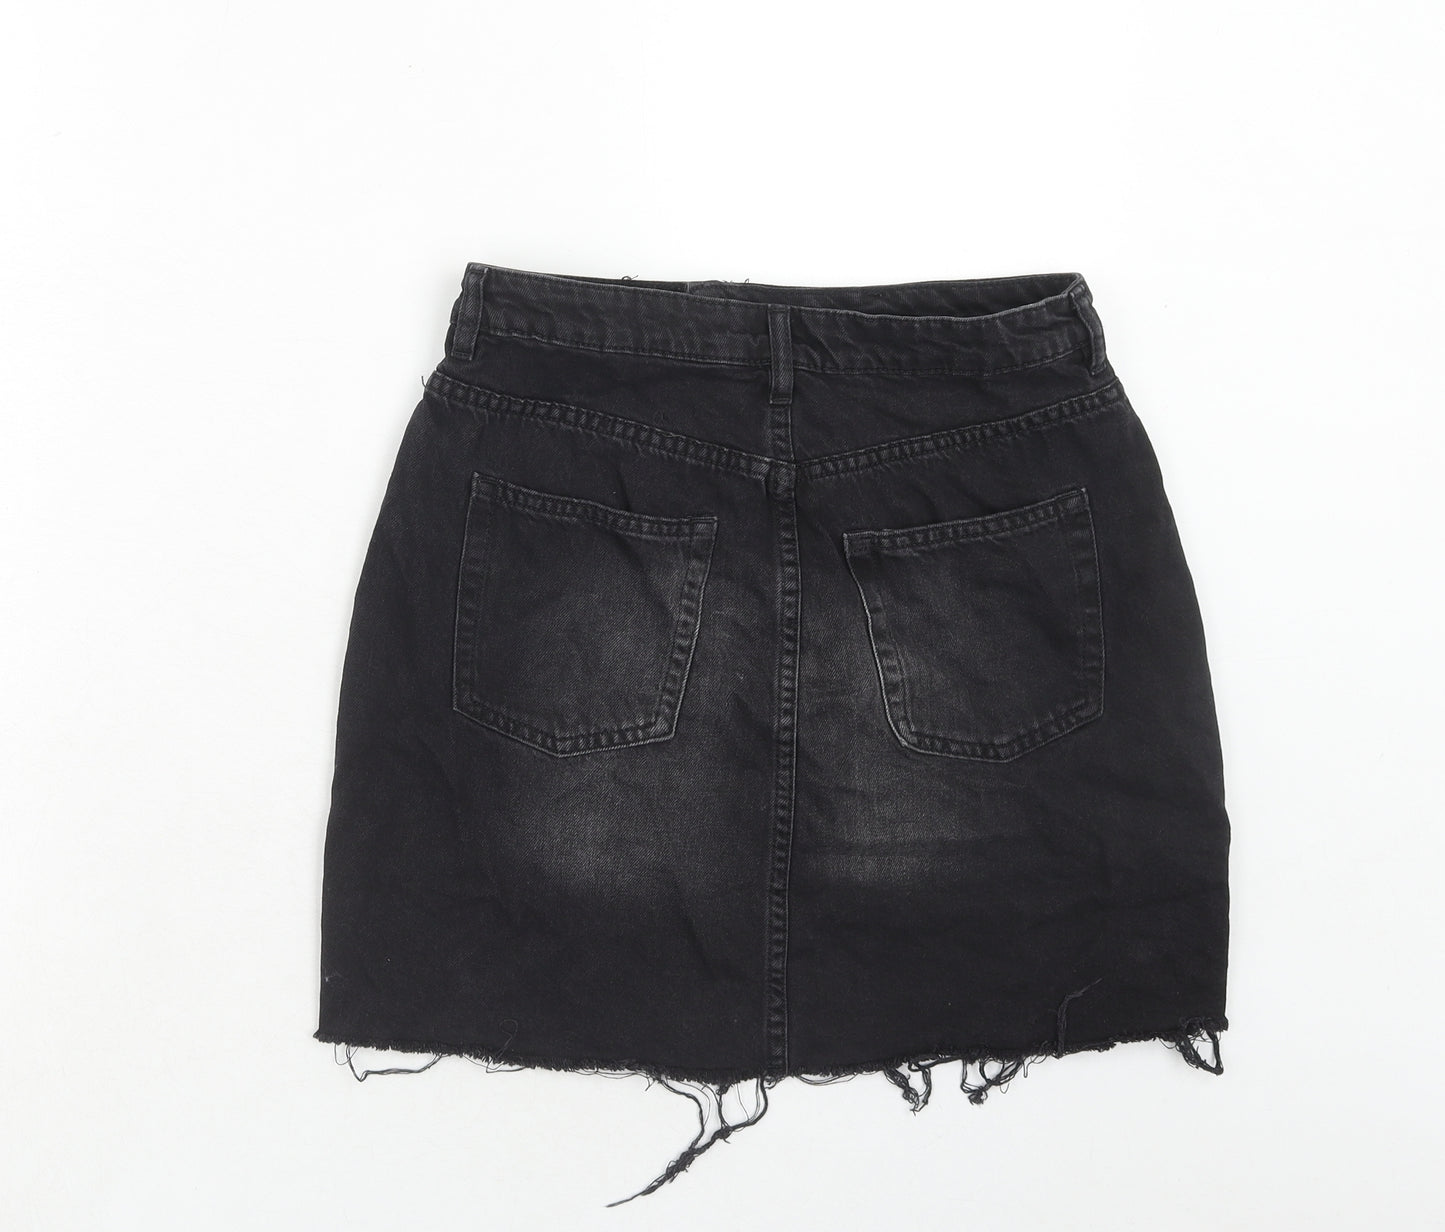 H&M Womens Black Cotton A-Line Skirt Size 8 Zip